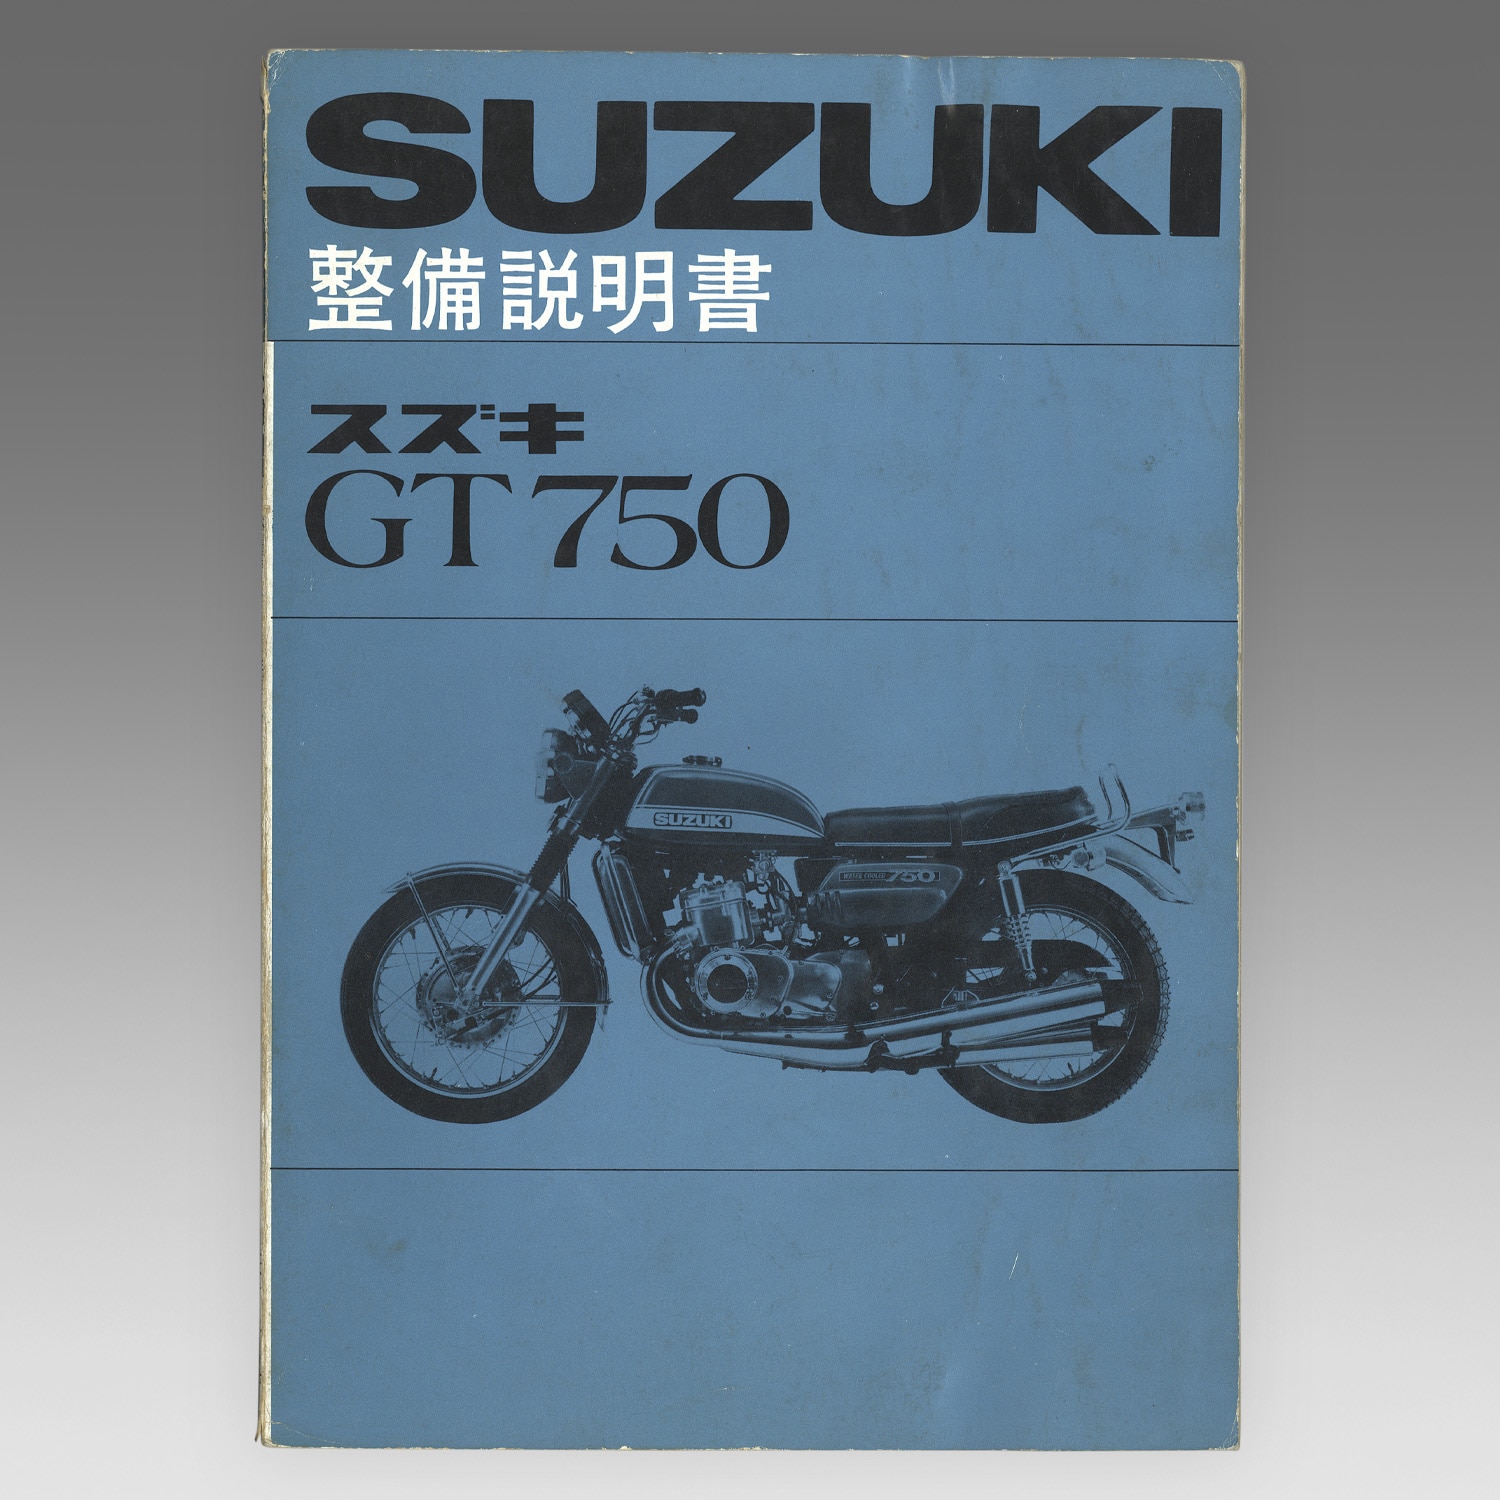 SUZUKI スズキ GT750のサービスマニュアル大変貴重な物だと思います